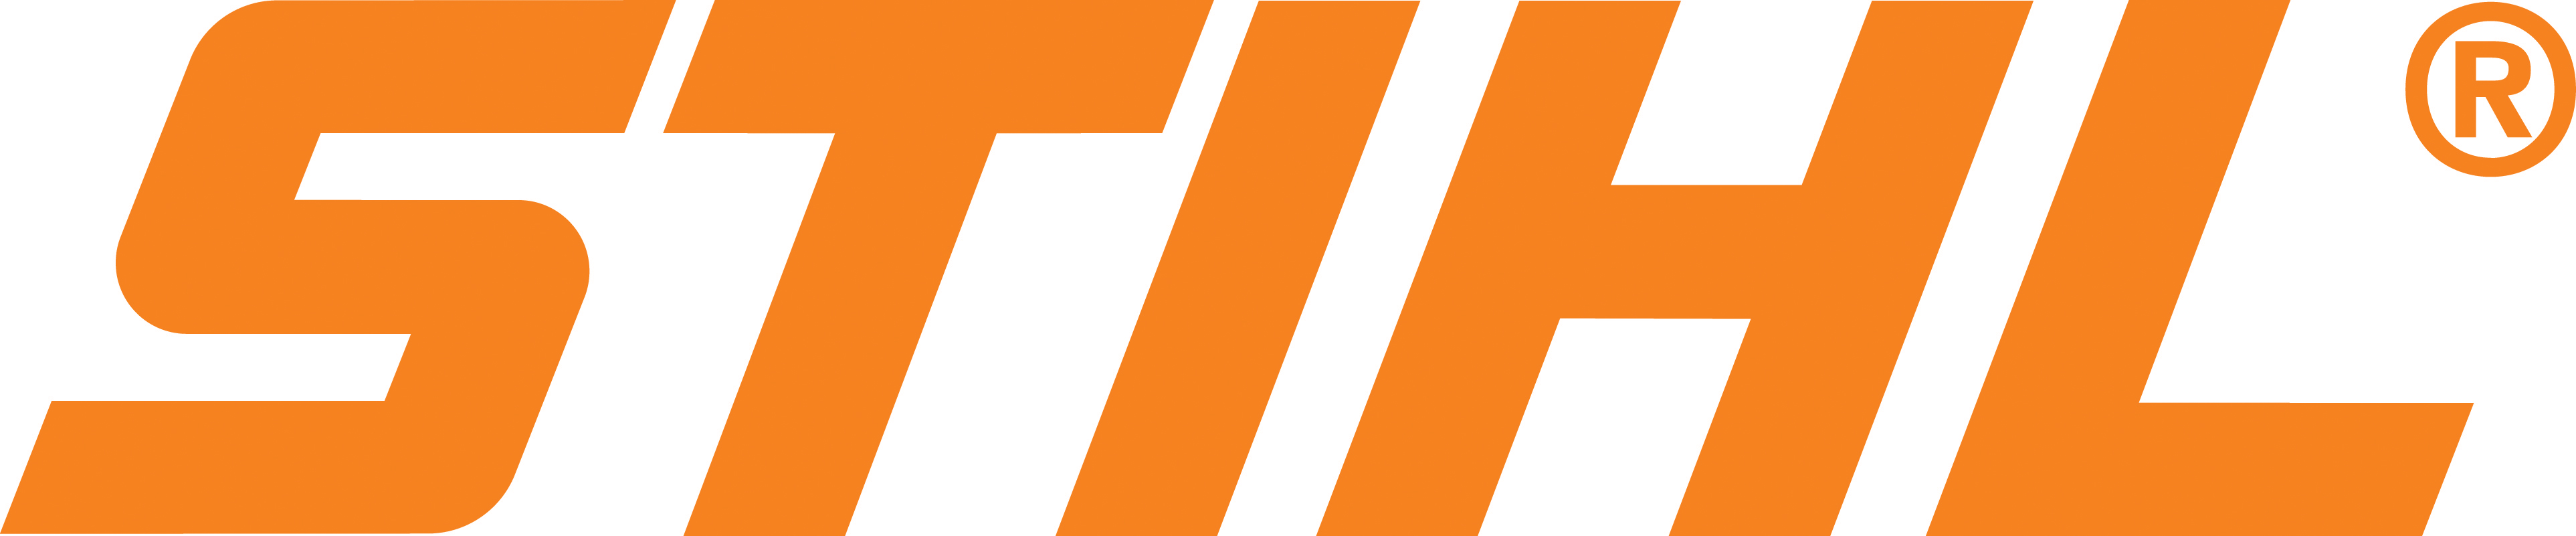 stihl-logo-vector-21.jpg